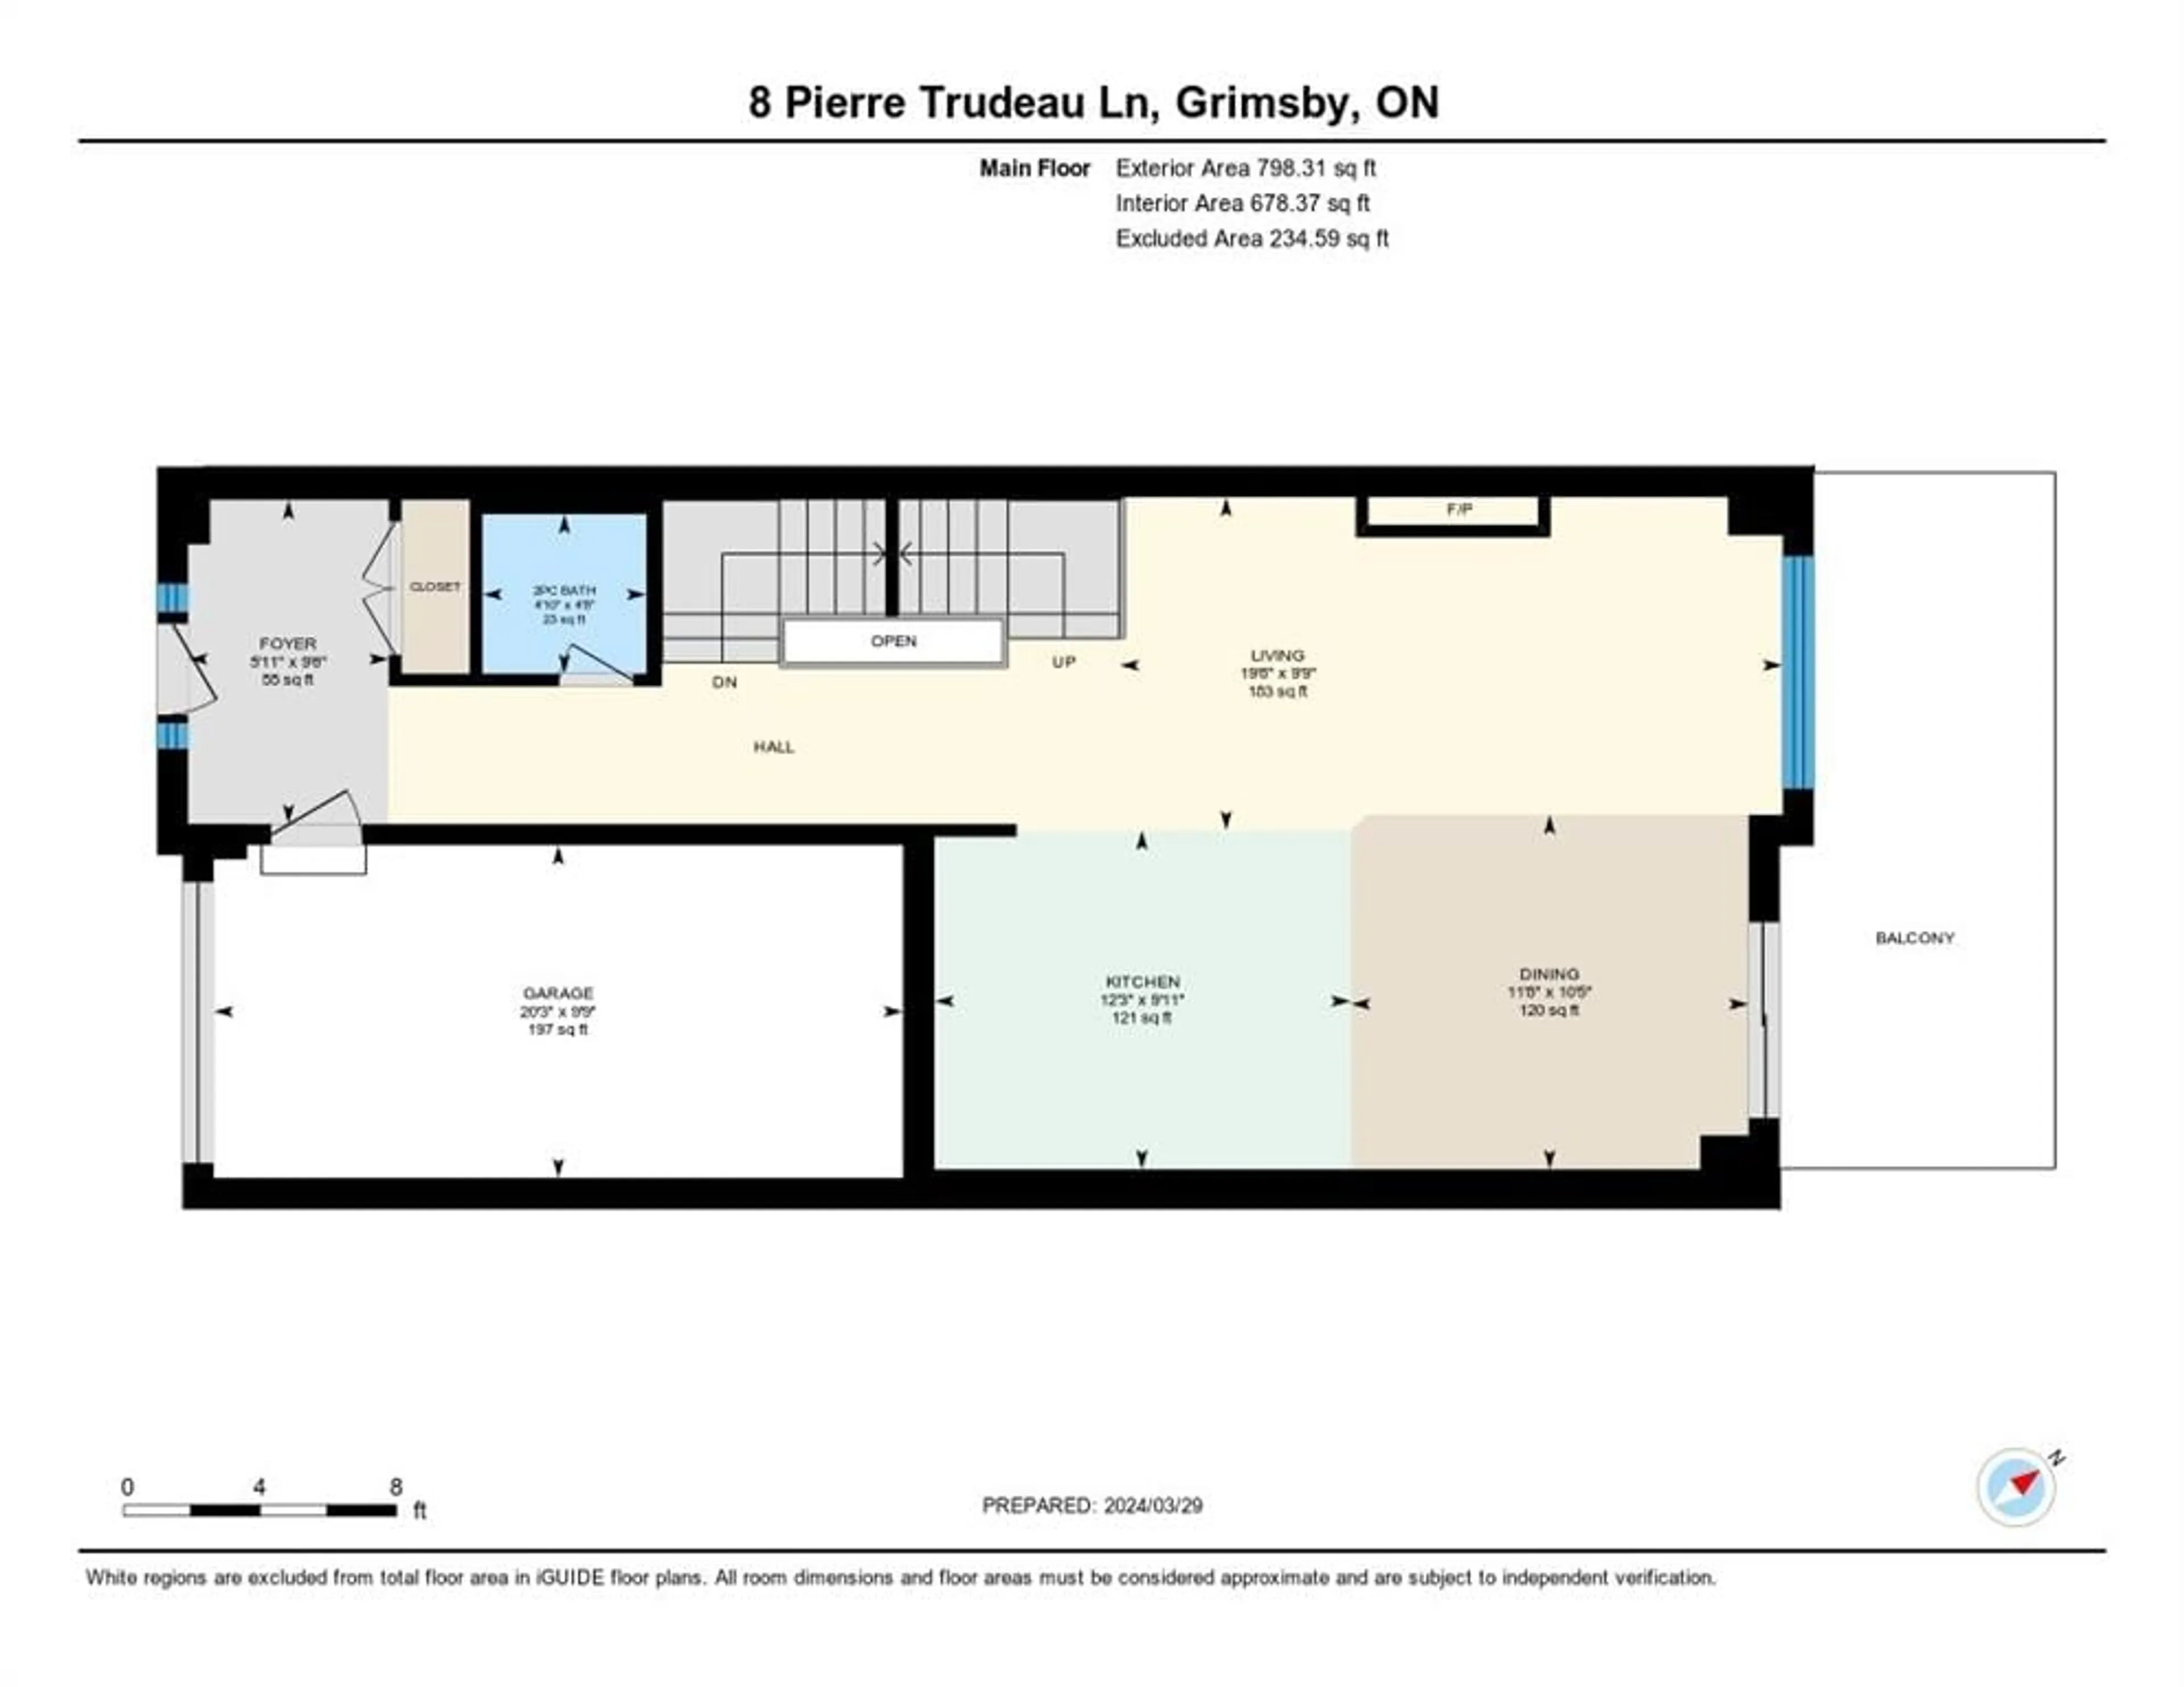 Floor plan for 8 Pierre Trudeau Lane, Grimsby Ontario L3M 0H3